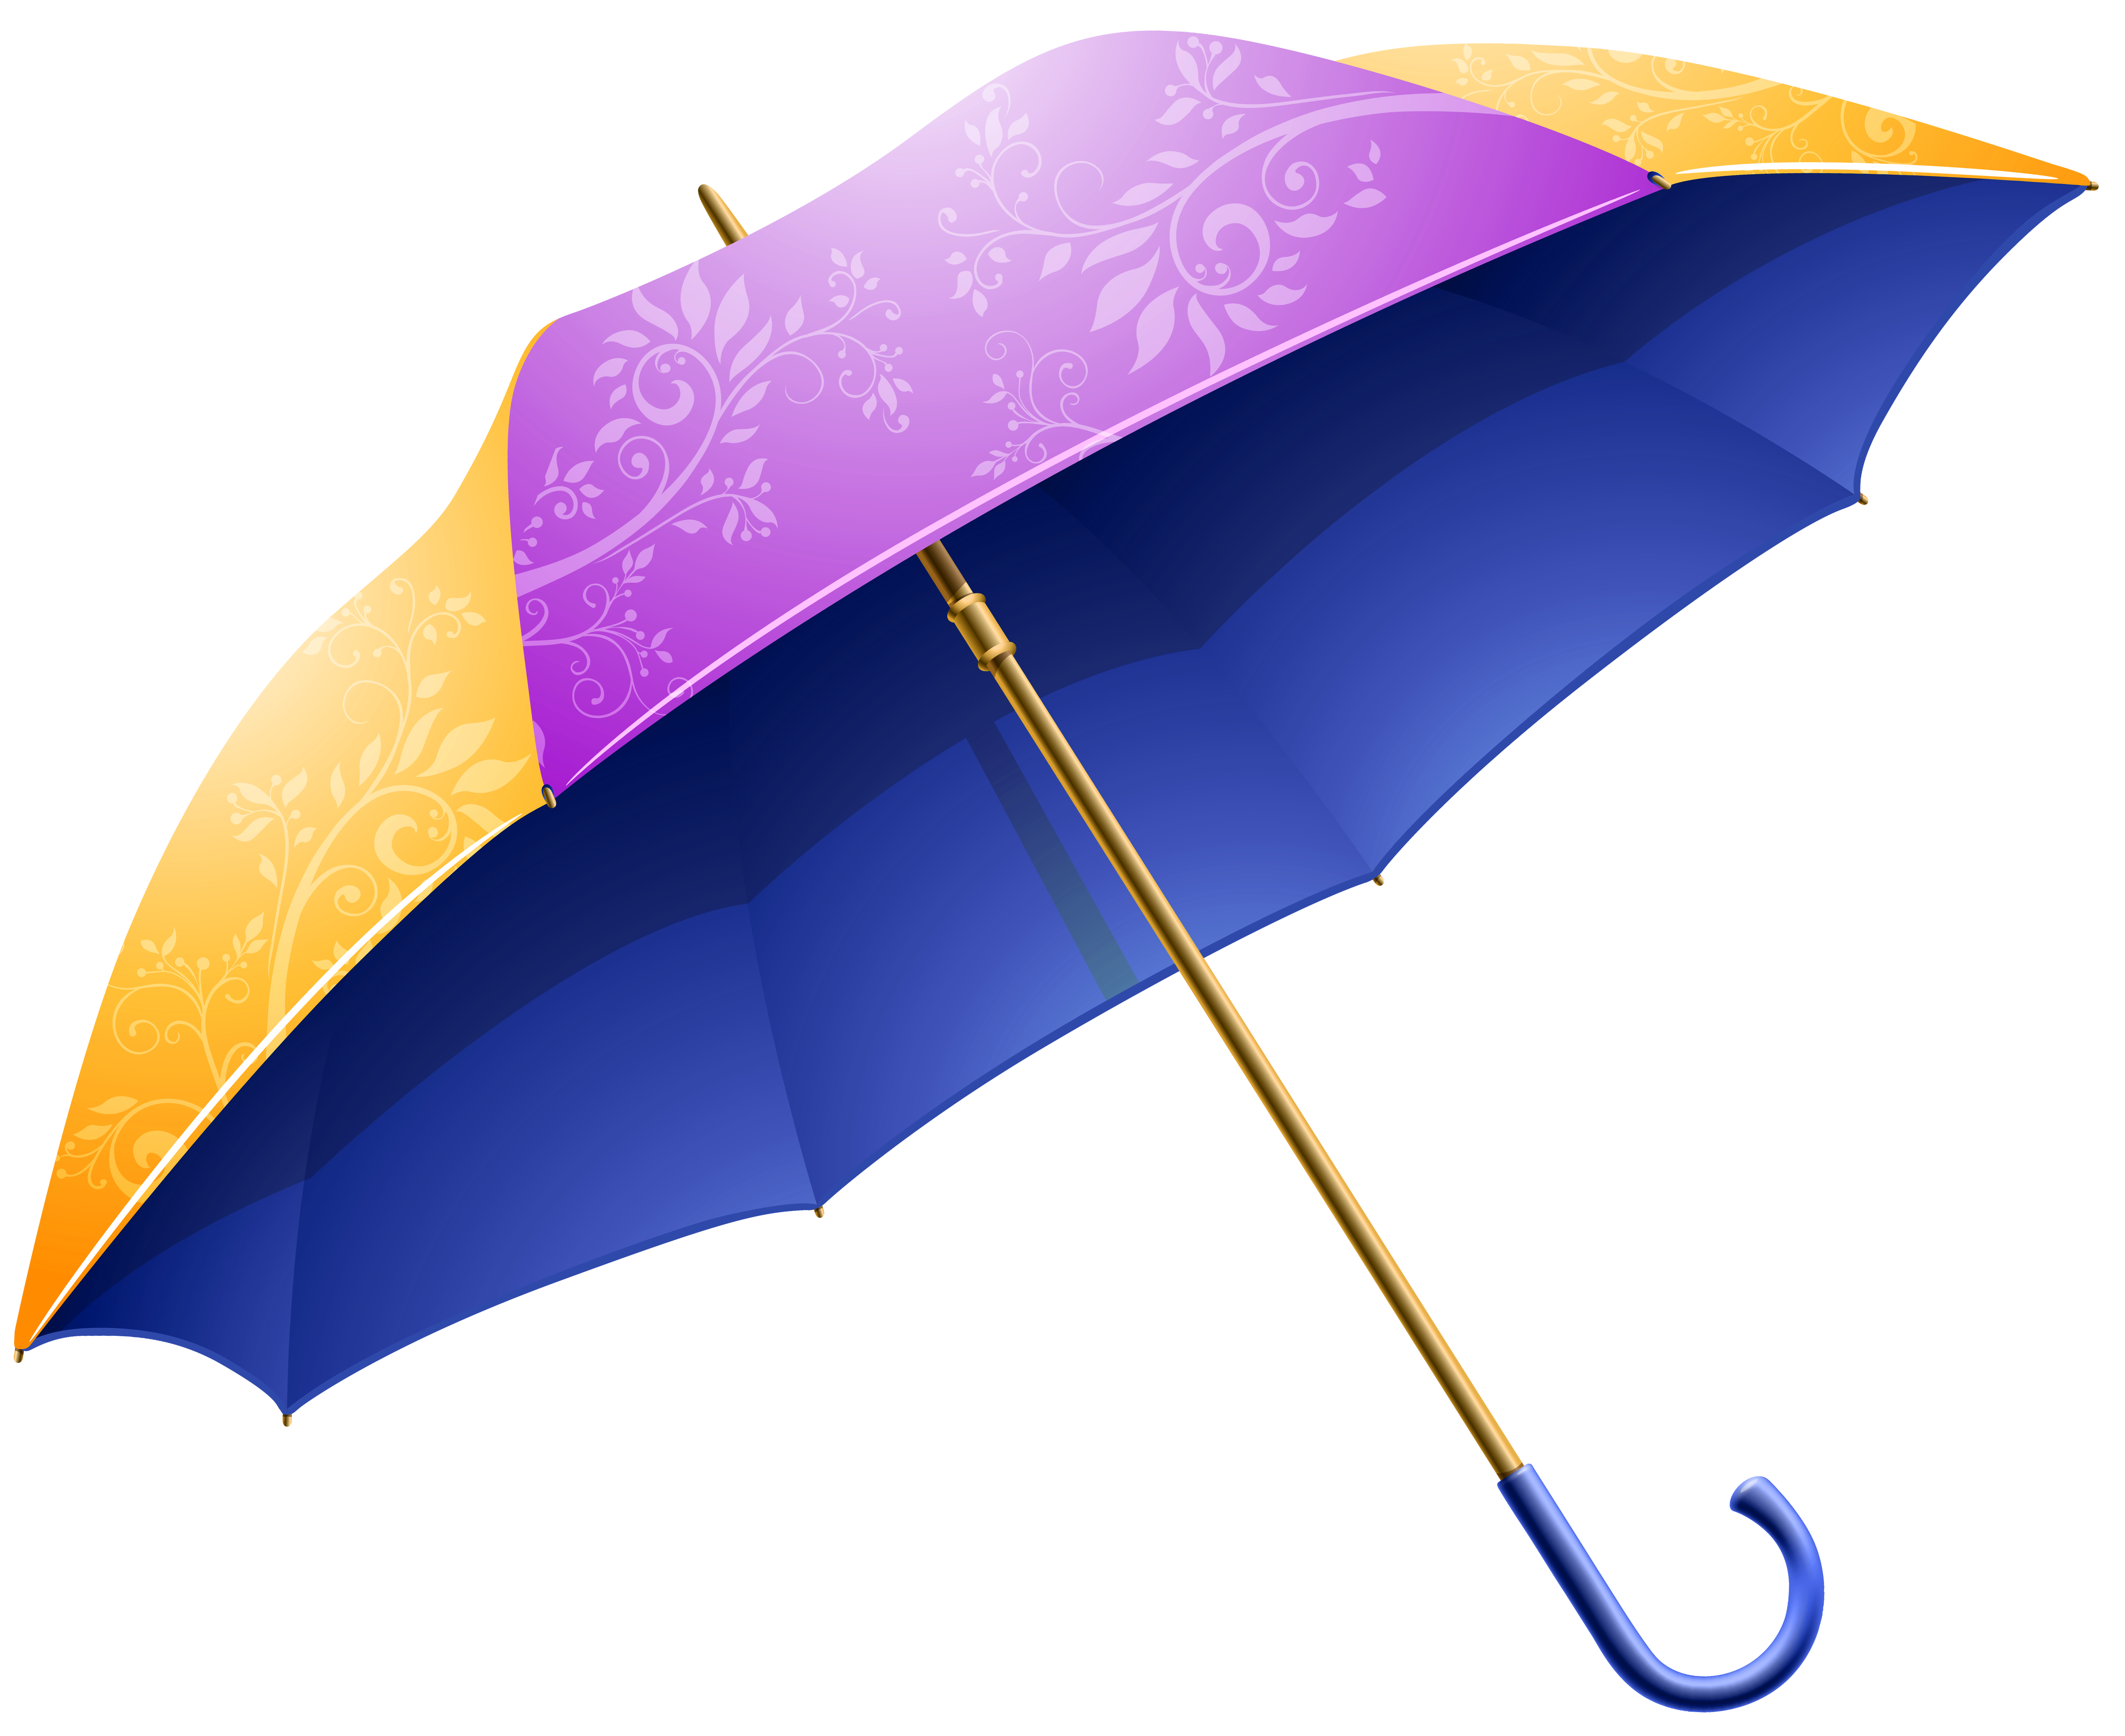 Paraplu transparant